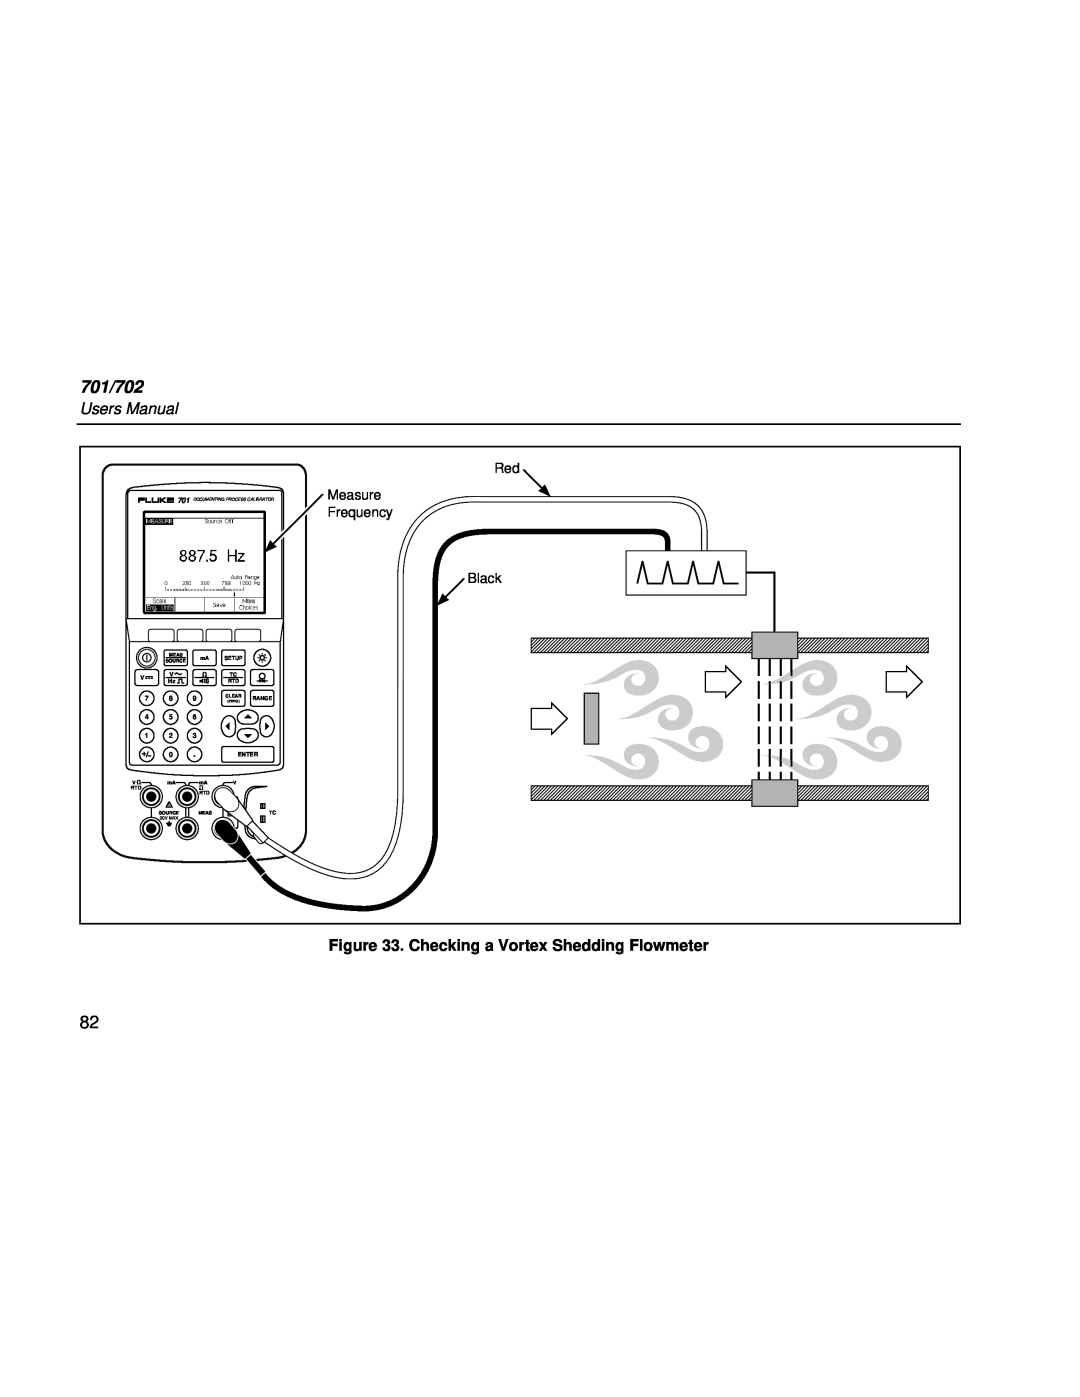 Fluke Rev. 4 user manual 701/702, Users Manual, Checking a Vortex Shedding Flowmeter, Red Measure Frequency Black, Enter 